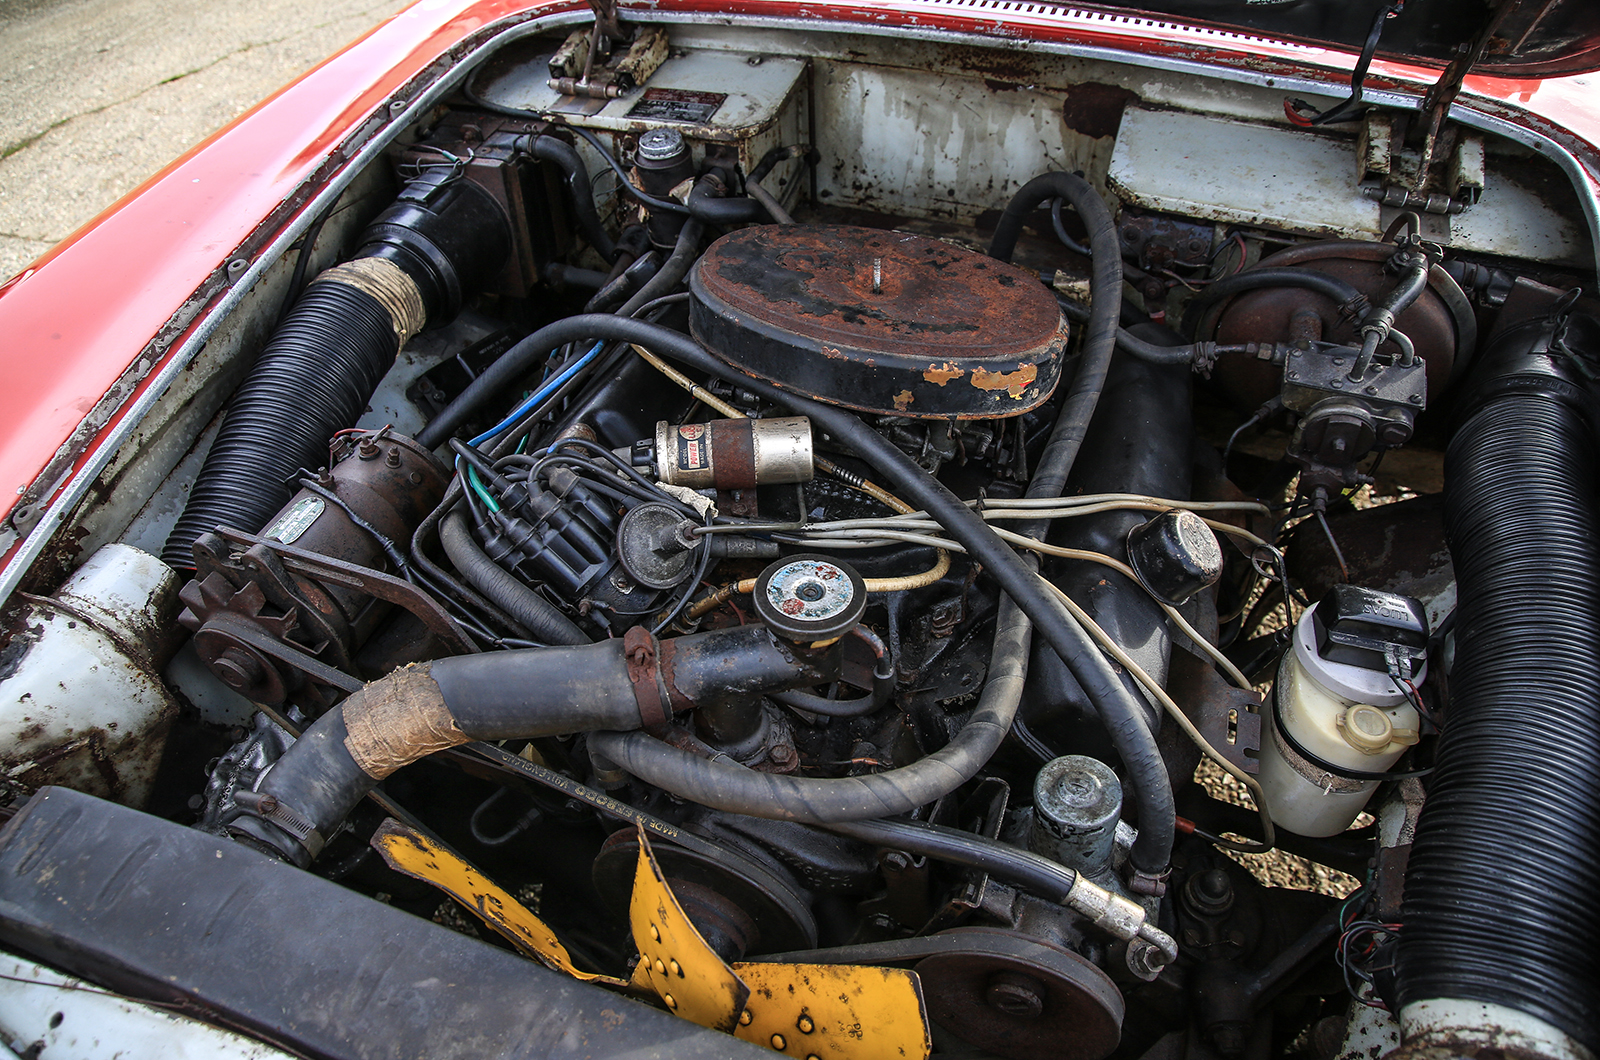 Classic & Sports Car – Barn-find Facel Vega show car to go under the hammer